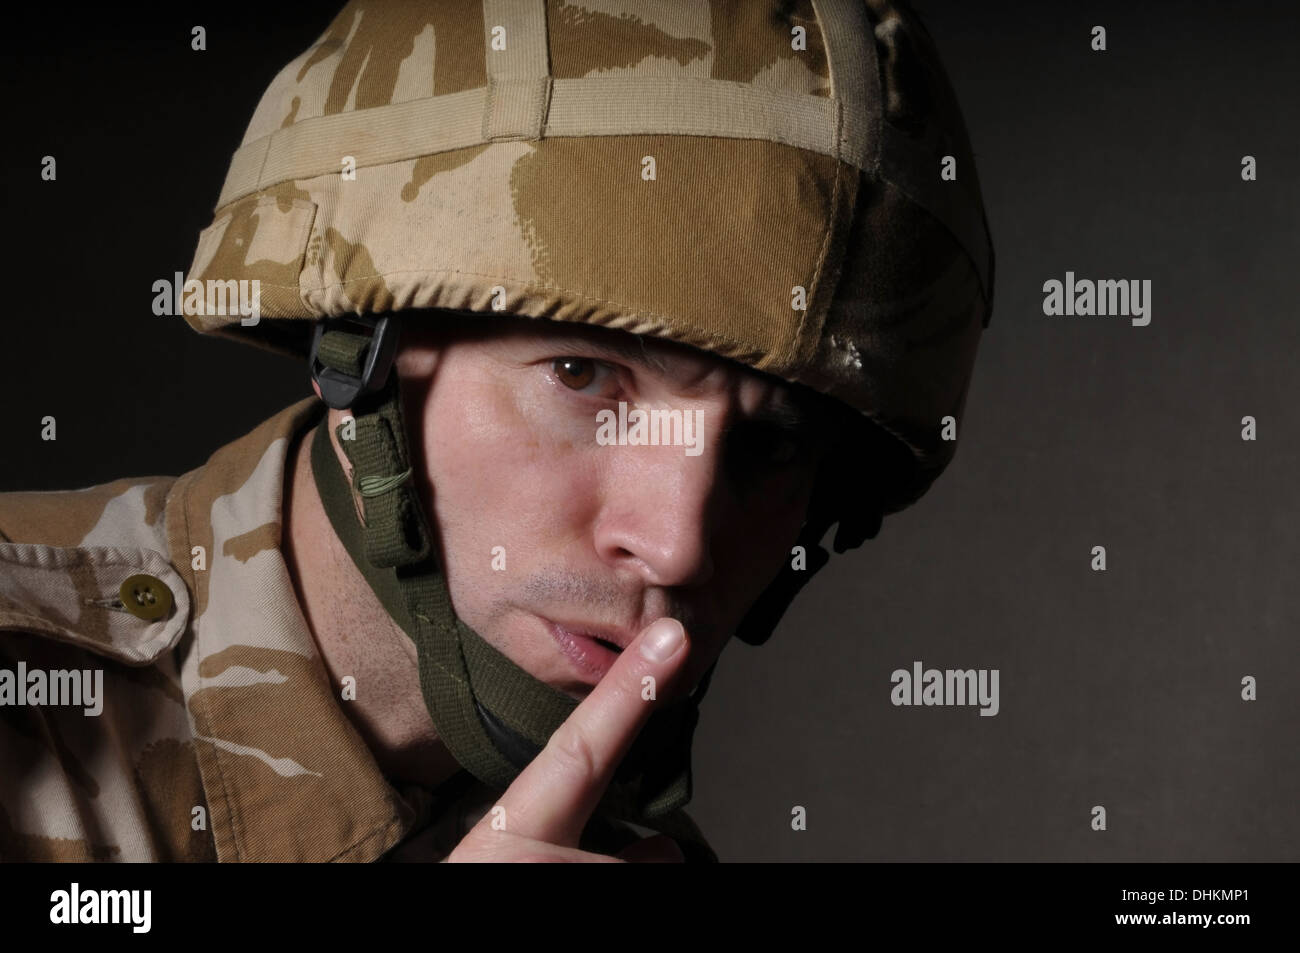 Shell Shocked American Soldier Vietnam War Stock Photo 407604274